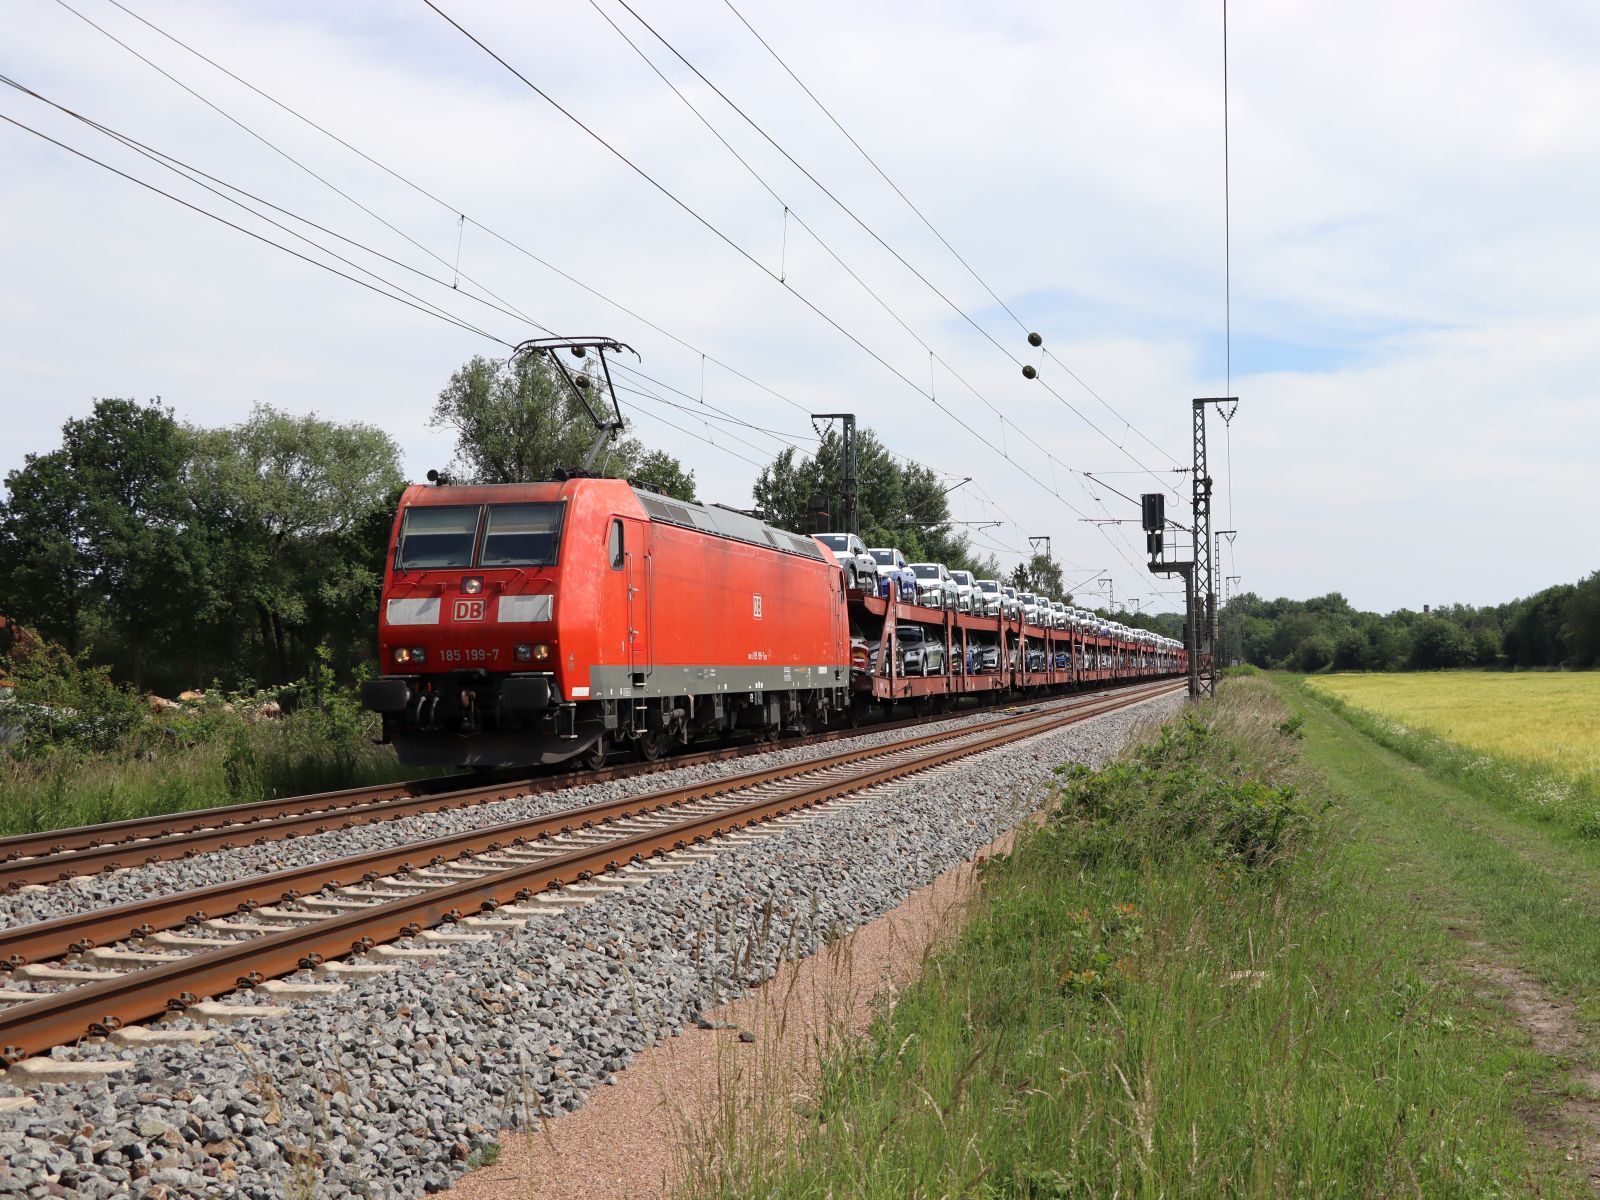 DB Cargo Lokomotive 185 199-7  Devesstraße, Salzbergen 03-06-2022.

DB Cargo locomotief 185 199-7  Devesstraße, Salzbergen 03-06-2022.